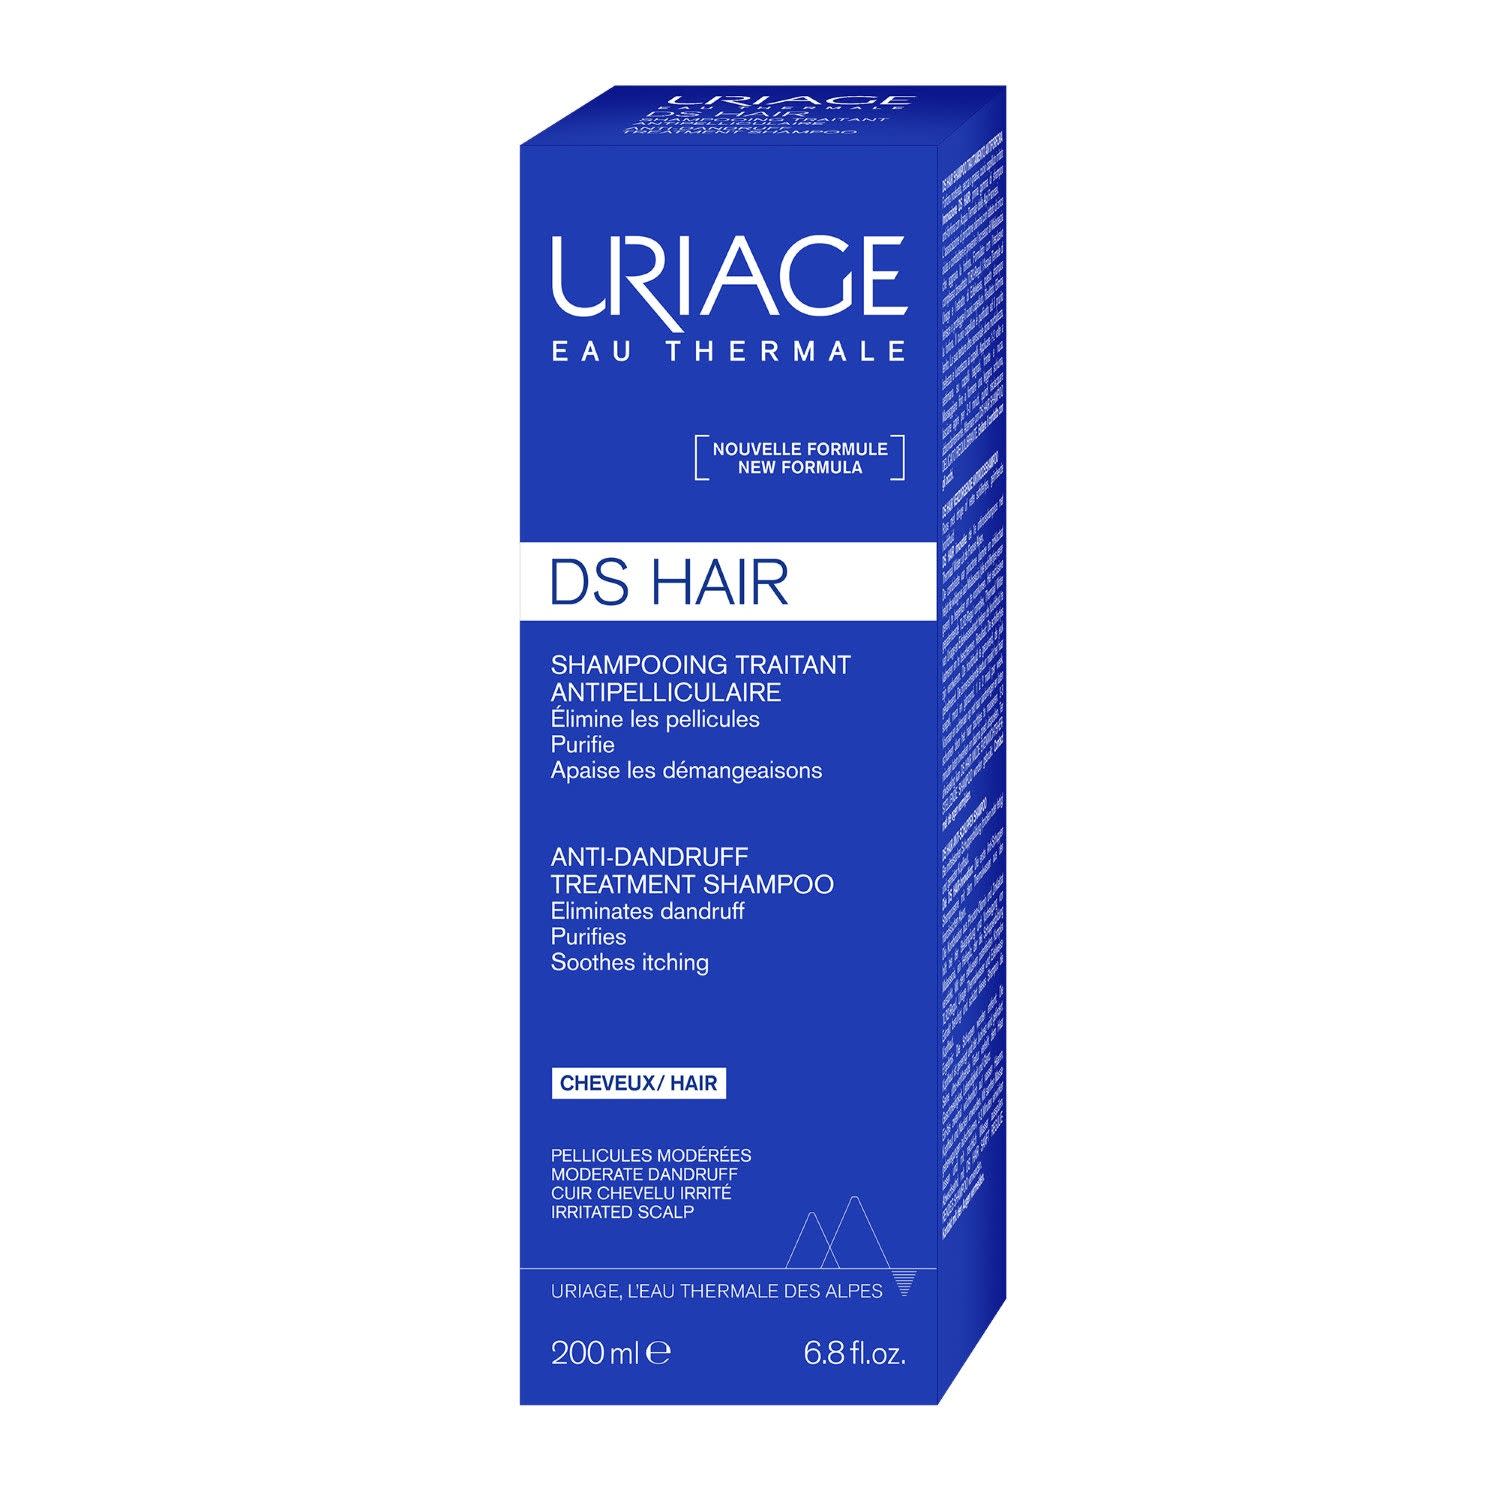 984896783 - Uriage DS Hair Shampoo Antiforfora 200ml - 4741506_2.jpg